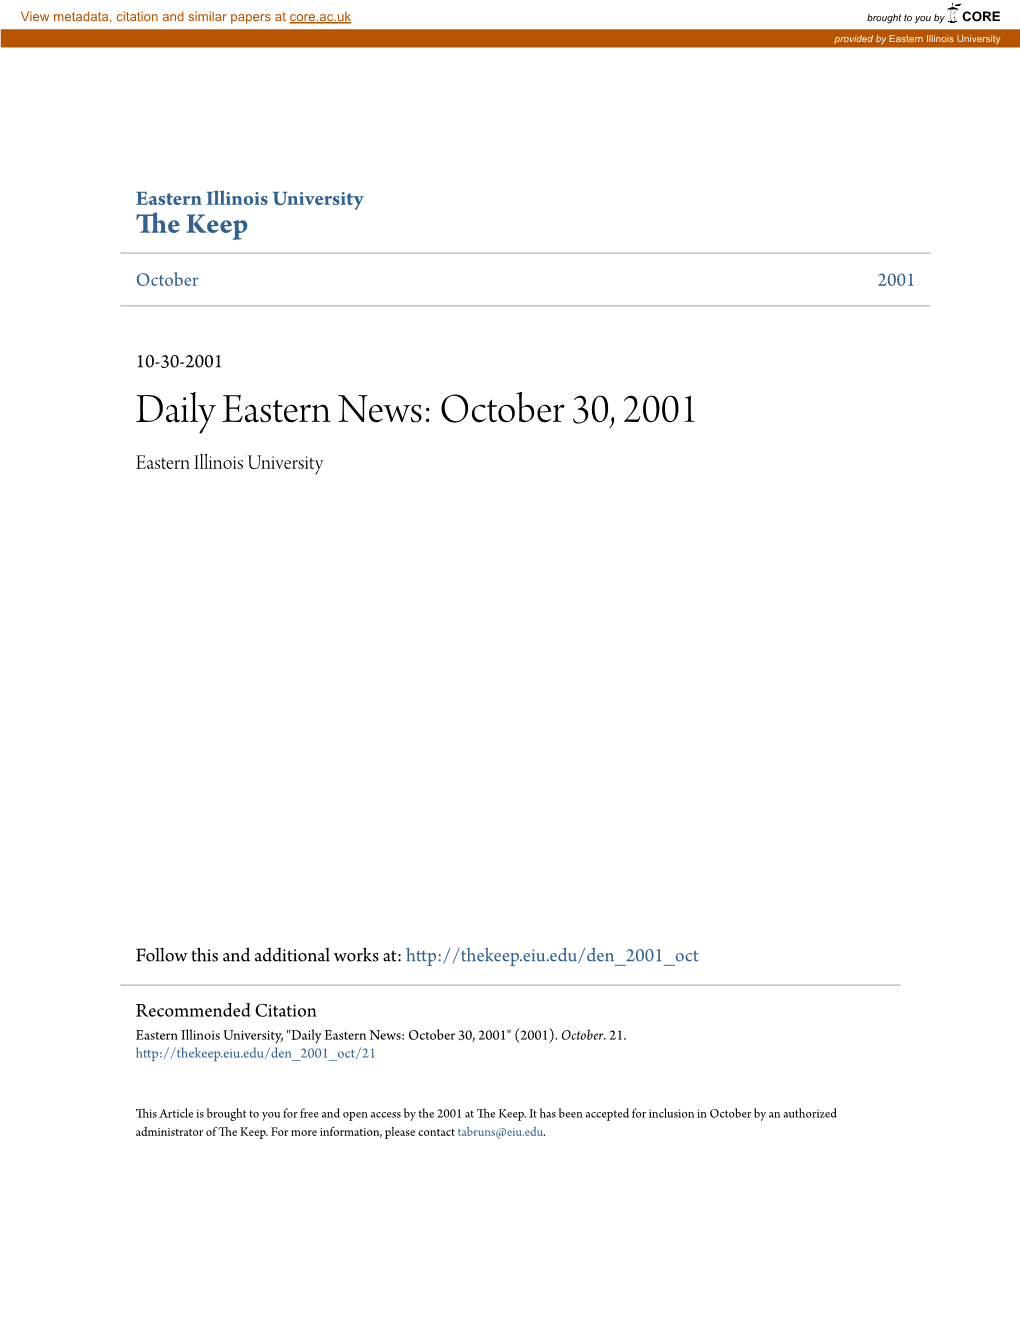 Daily Eastern News: October 30, 2001 Eastern Illinois University